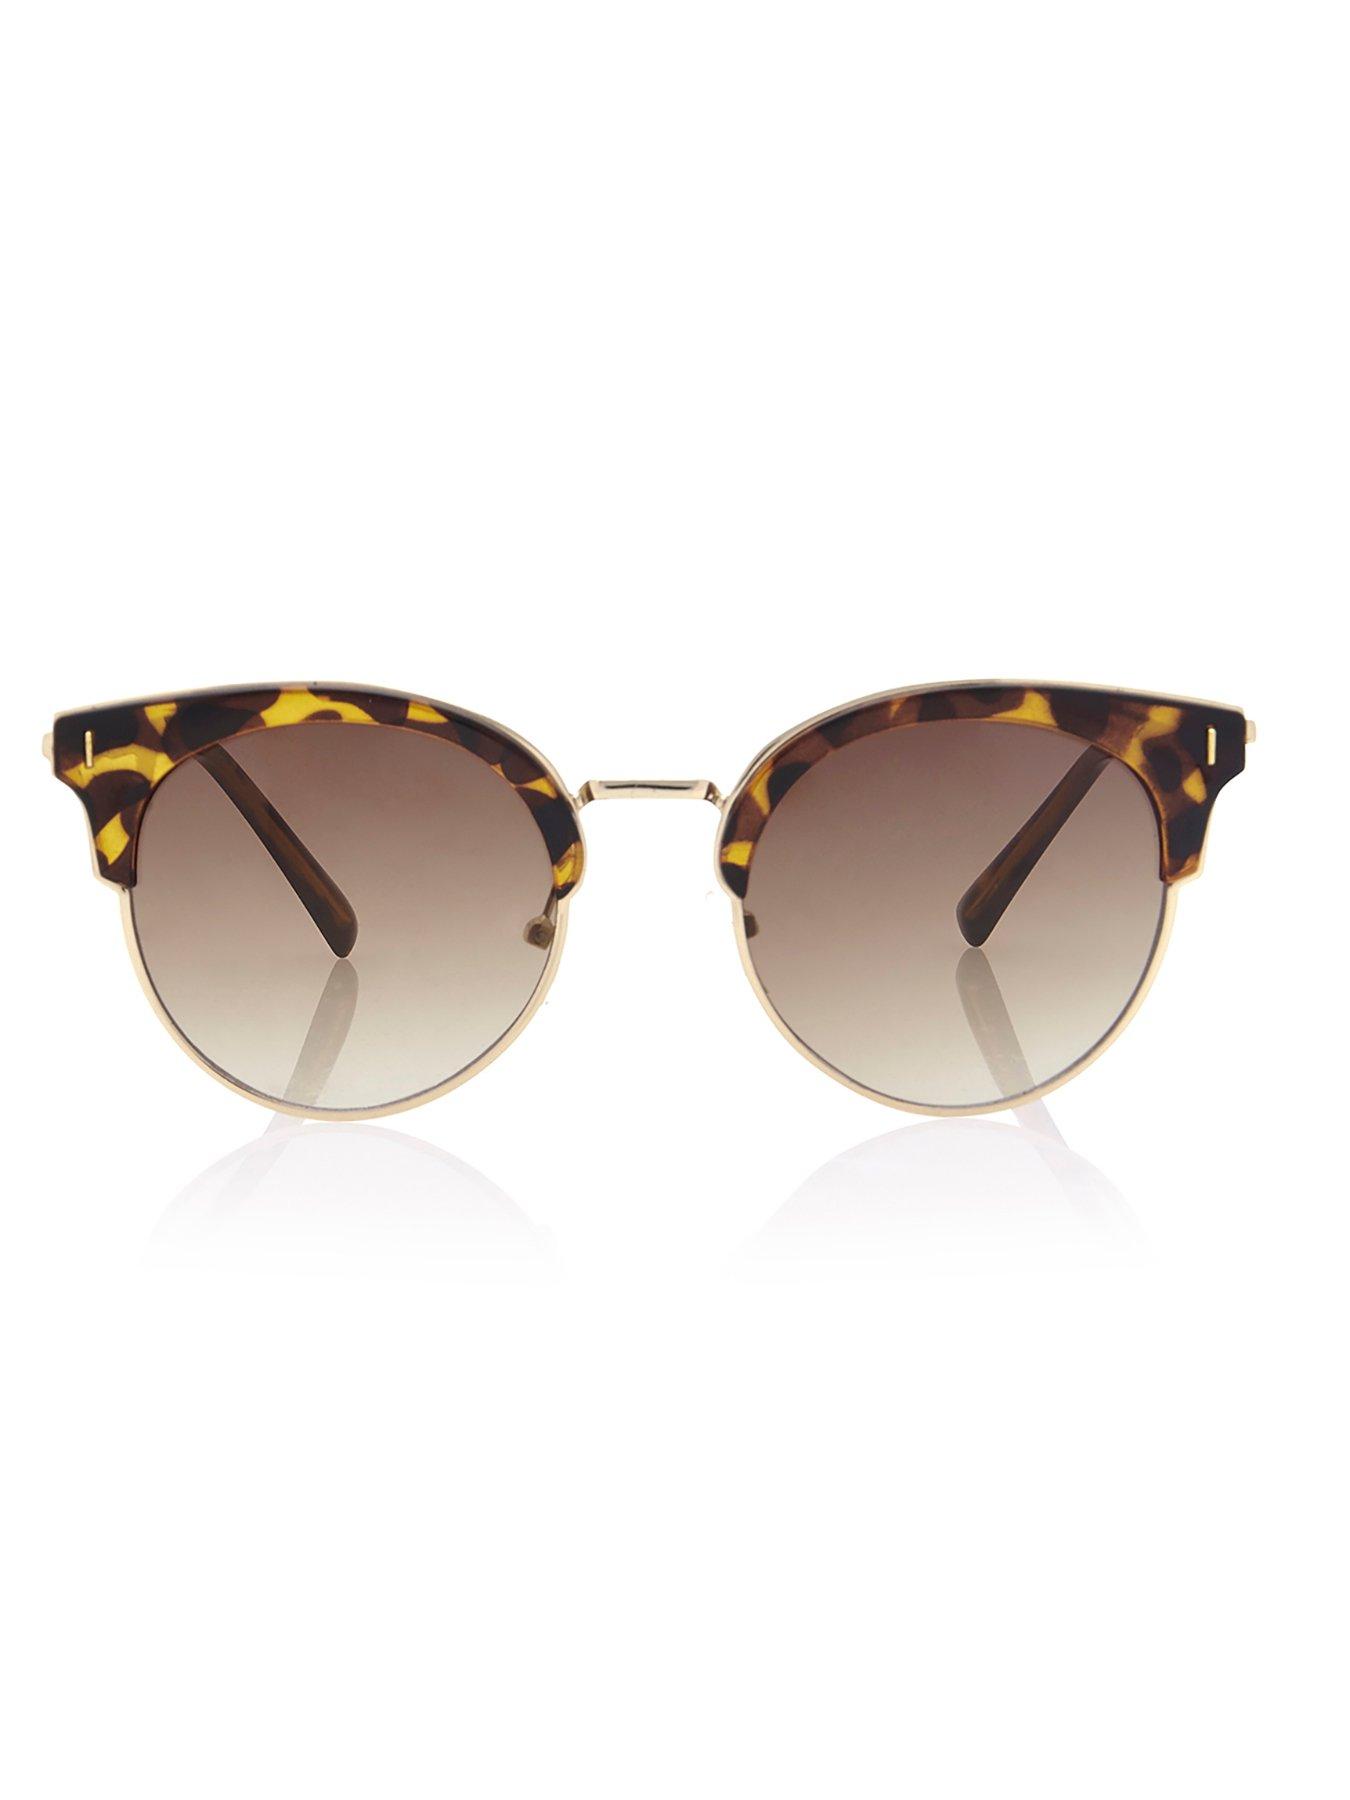  Cateye Sunglasses - Gold